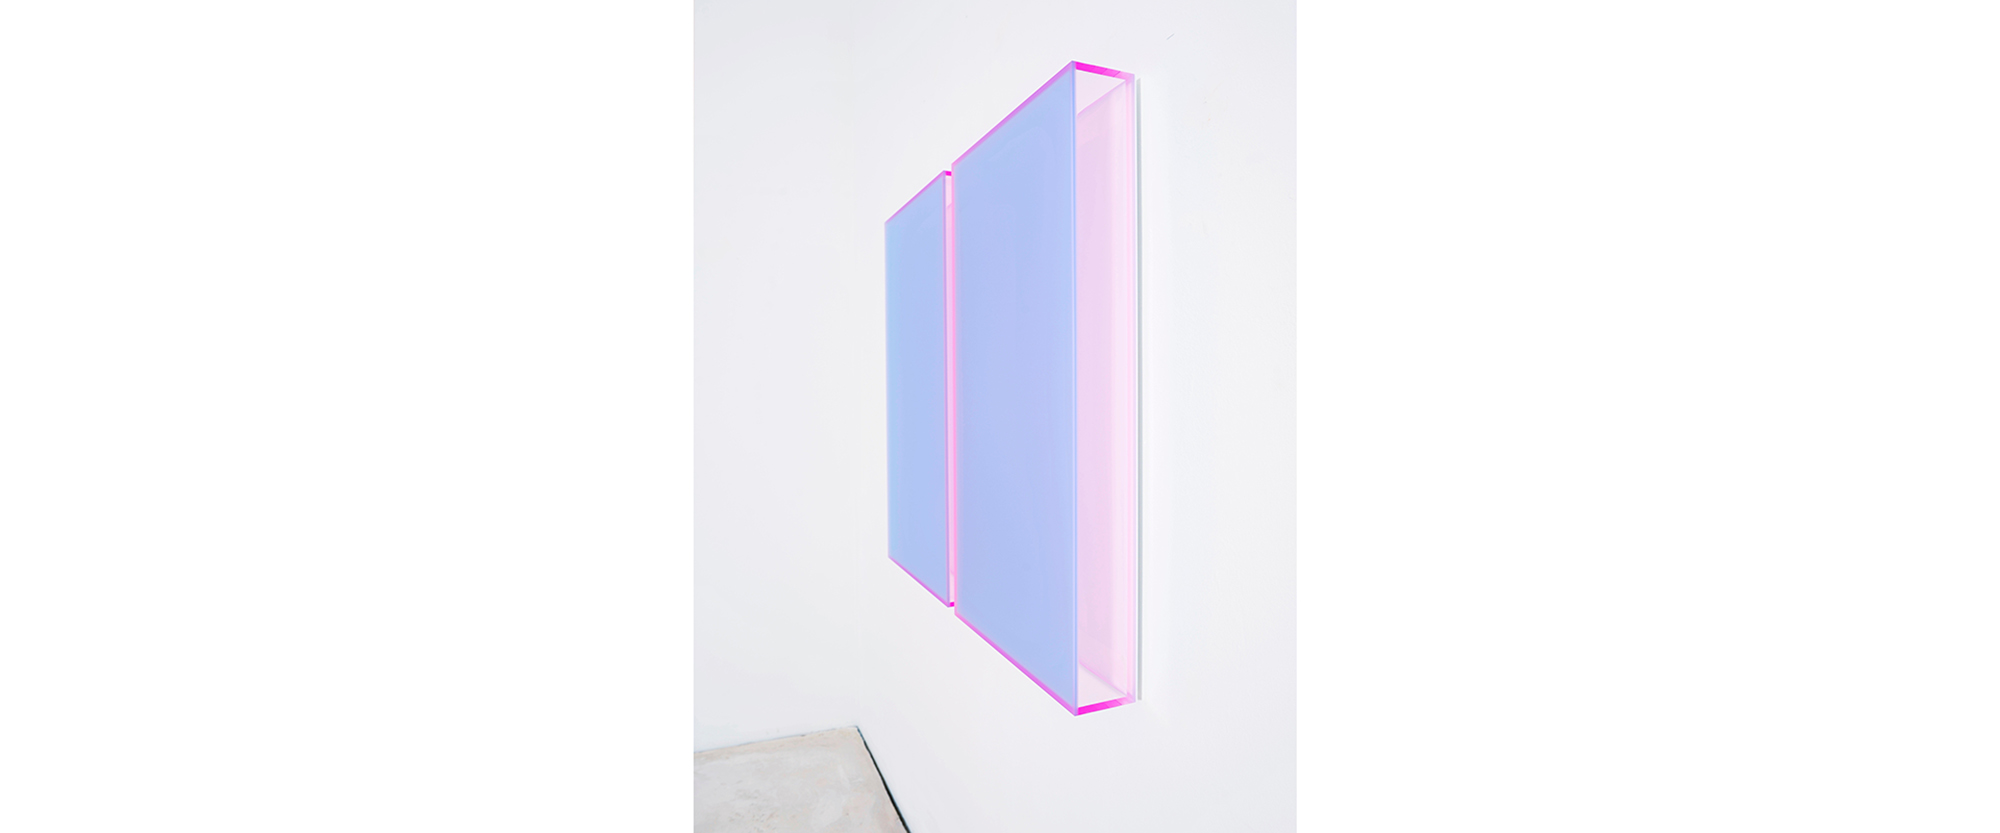 color satin ice blue amsterdam - 2018, Acrylglas, fluoreszierend, 2teilig, 80 x 90 x 9 cm